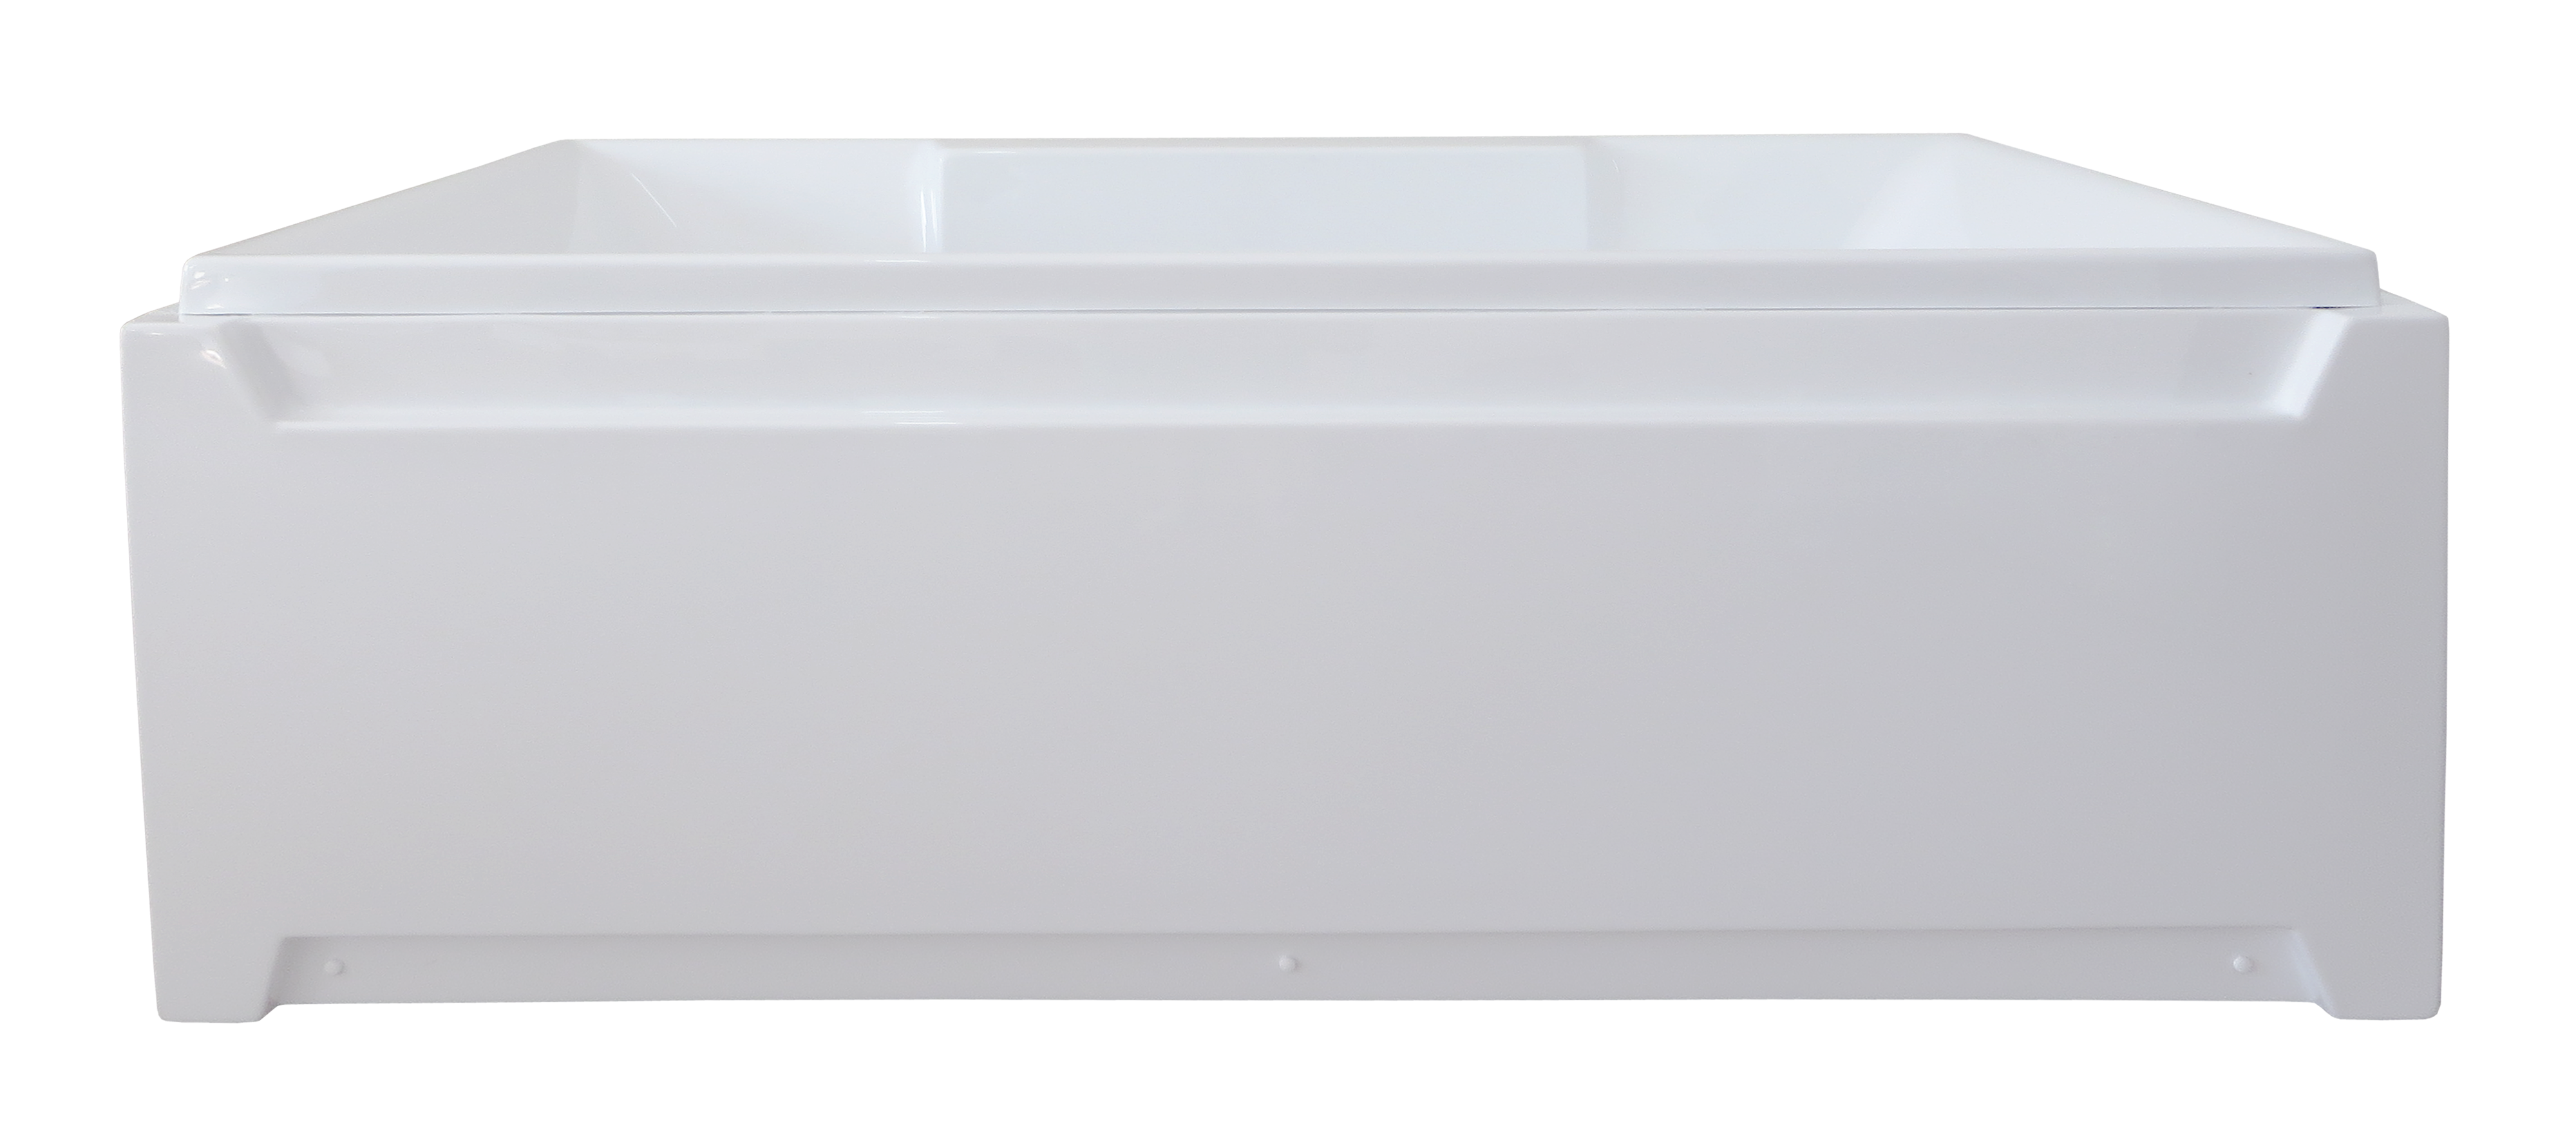 Акриловая ванна Royal Bath Triumph 170x87 в сборе, размер 170x87, цвет белый RB665101SB - фото 4